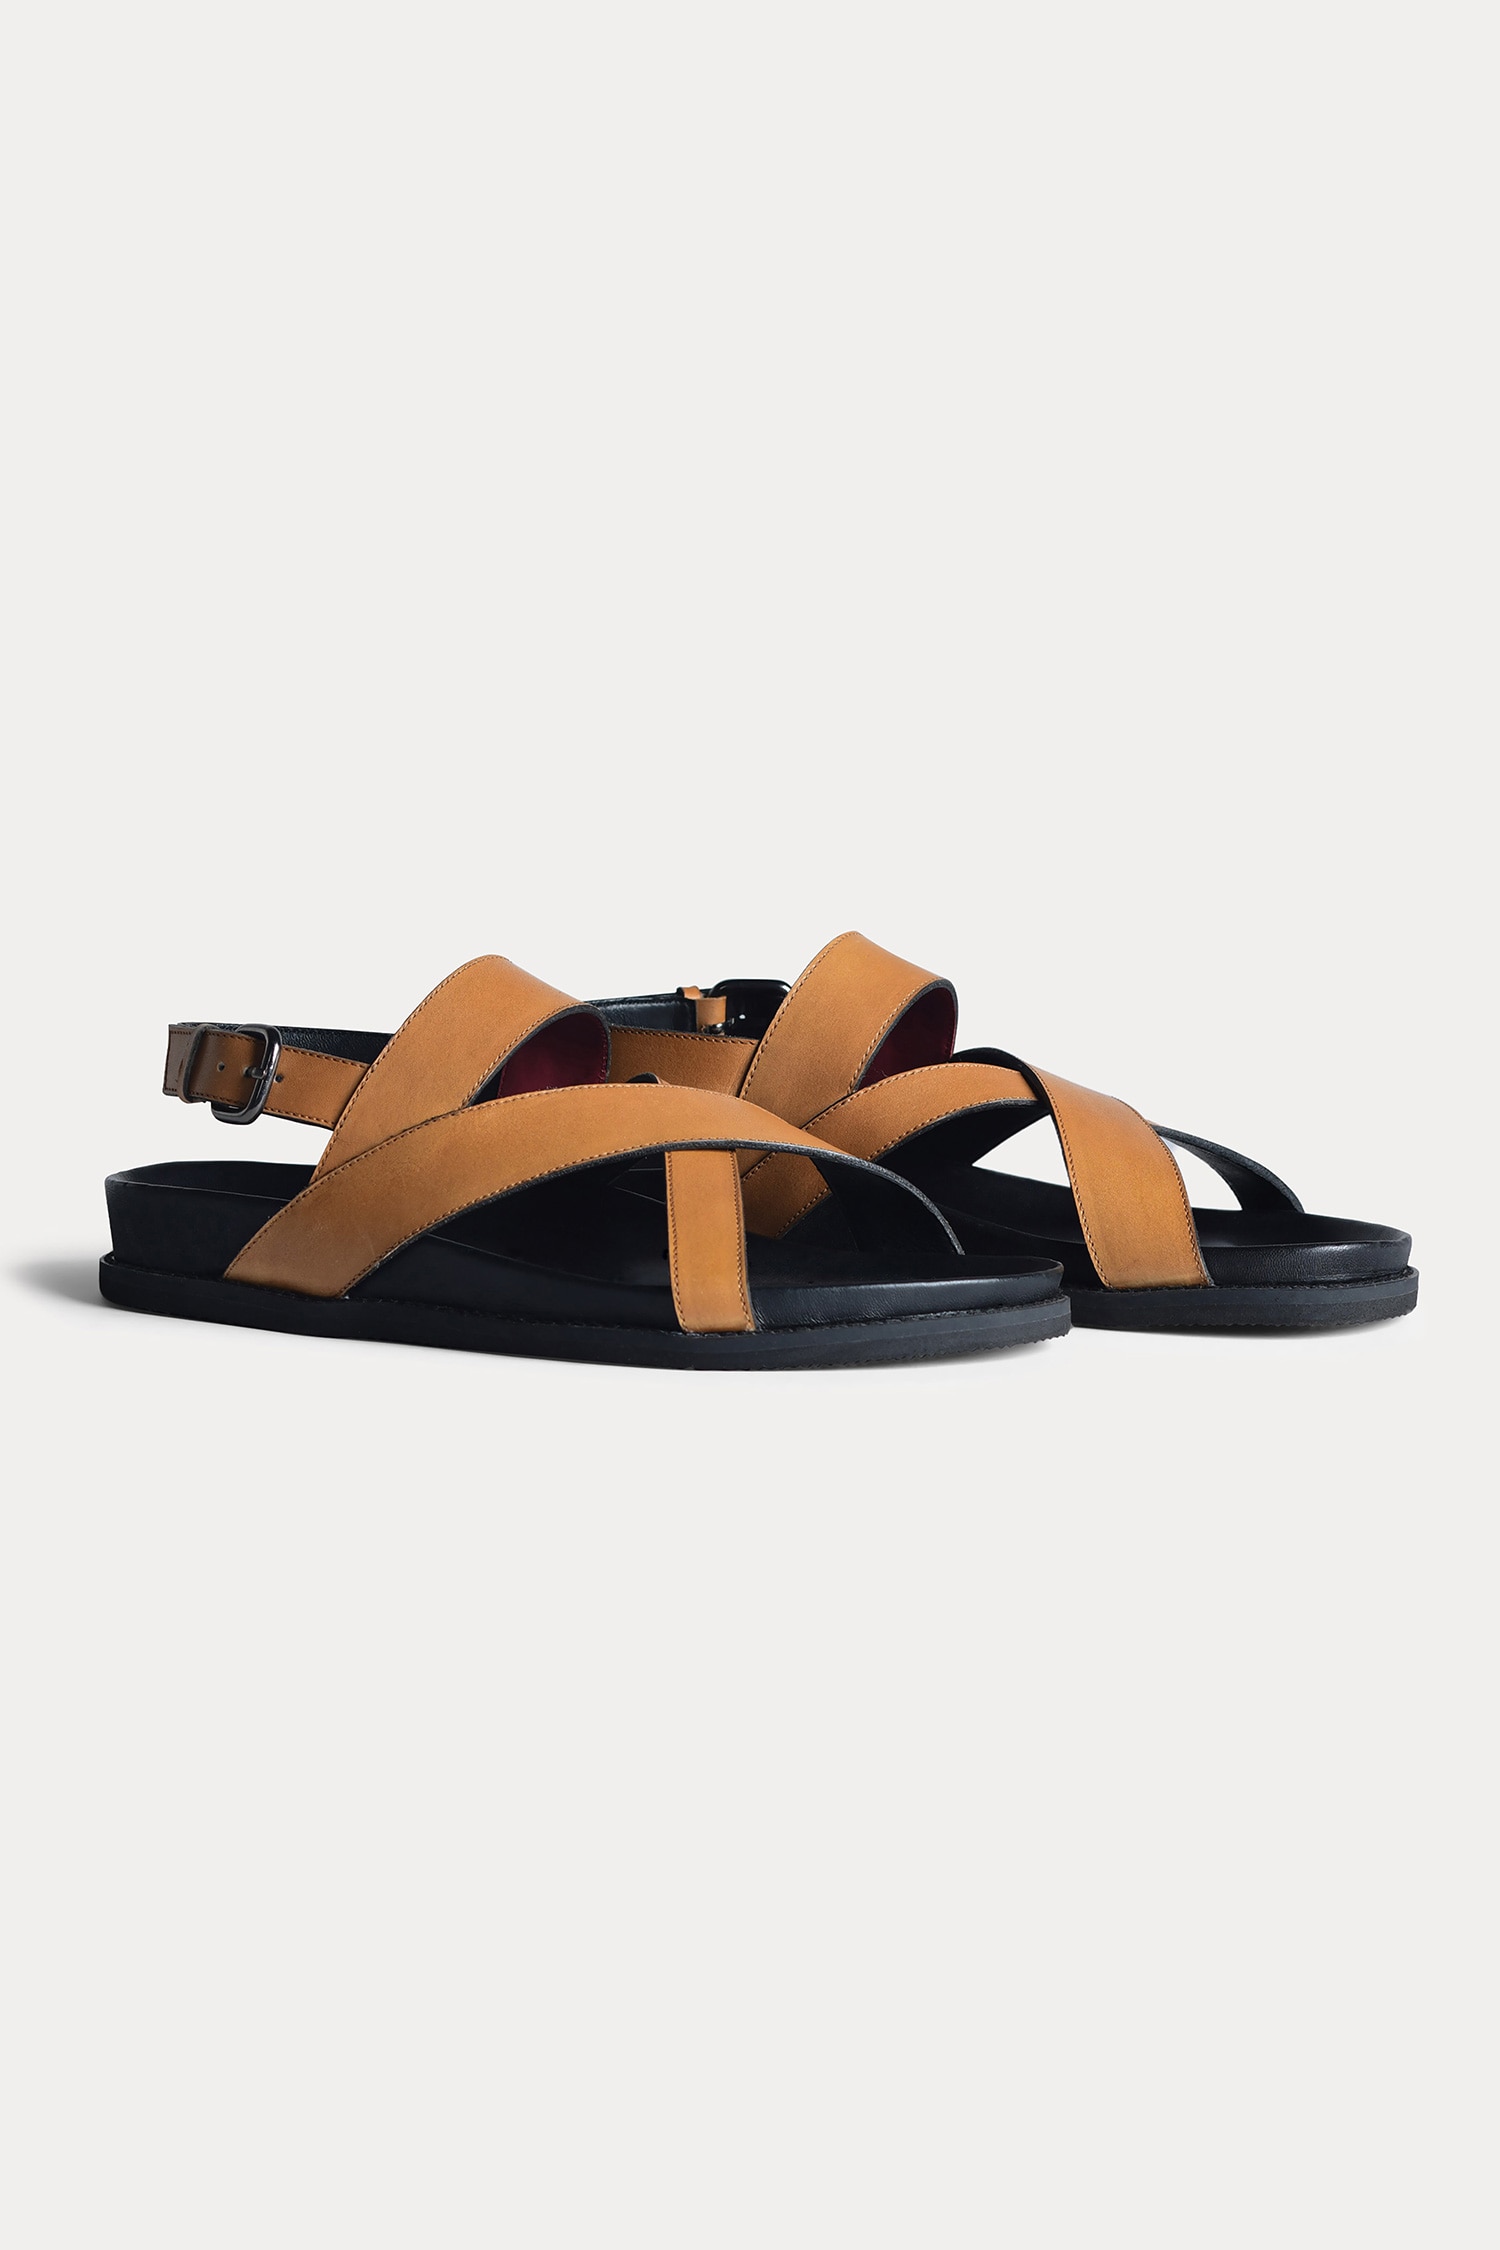 Corneliani Waikiki Beach Leather Sandals - Farfetch